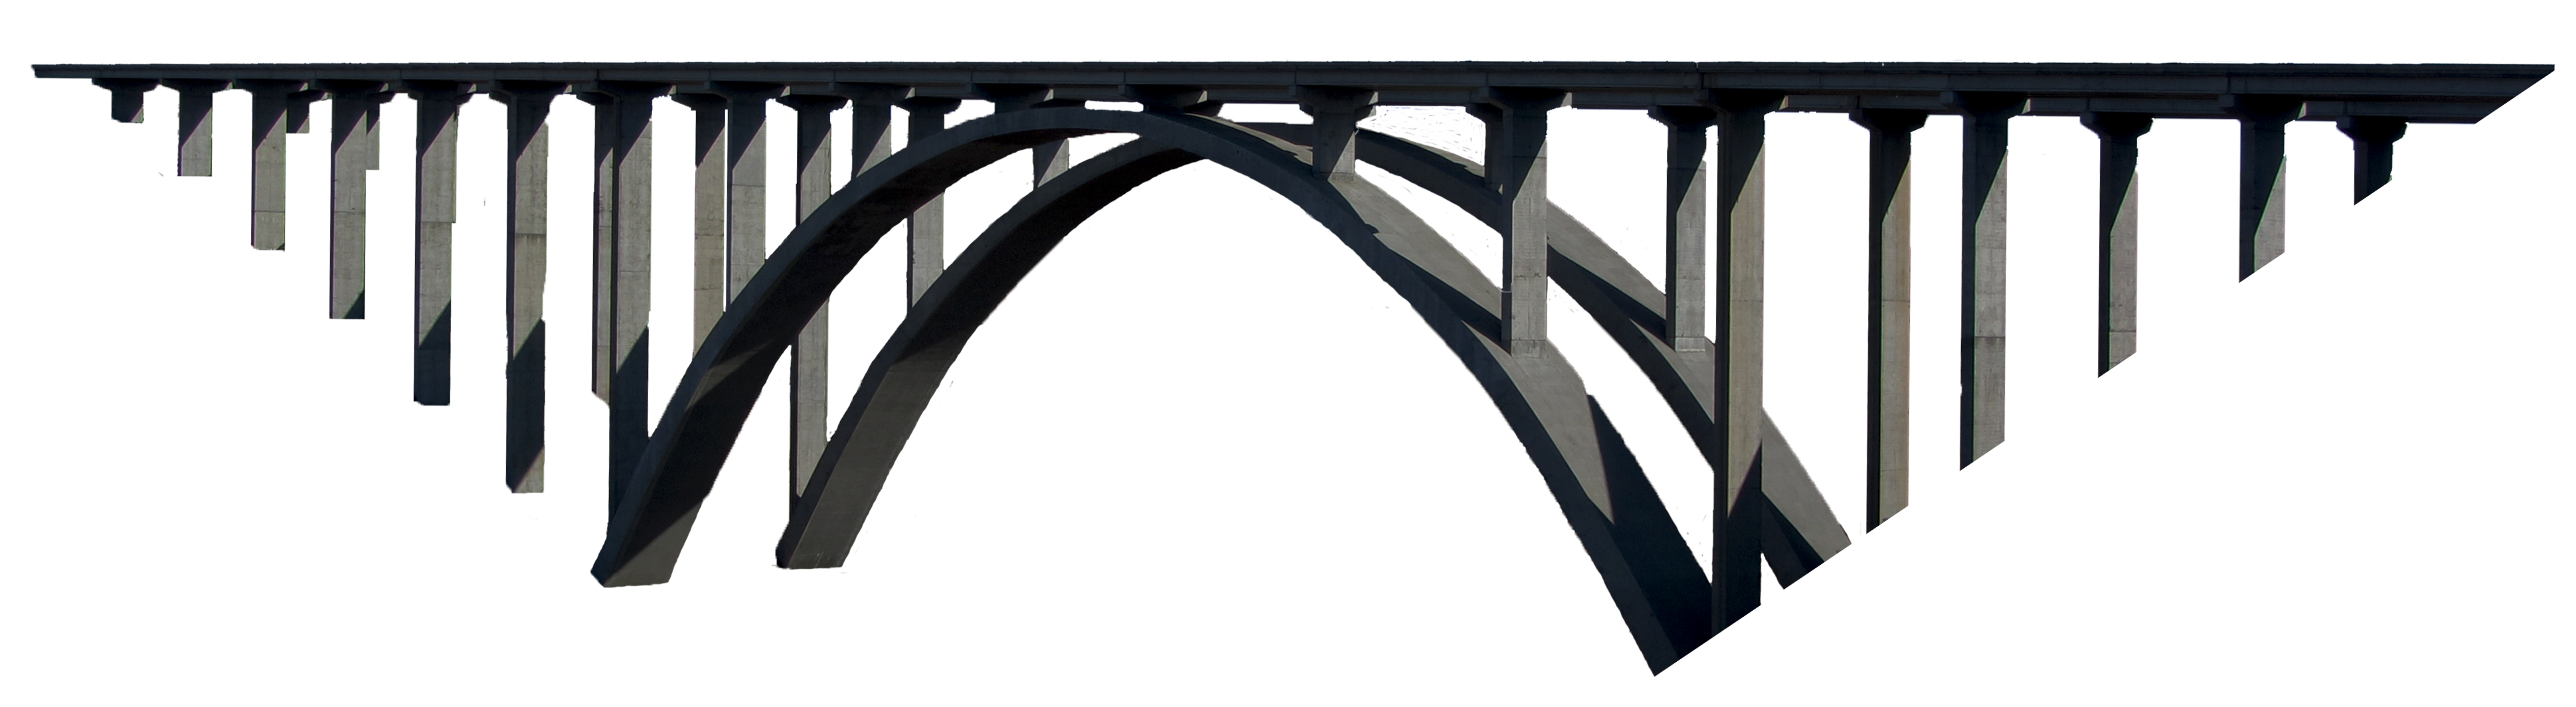 Bridge PNG Transparent Images | PNG All